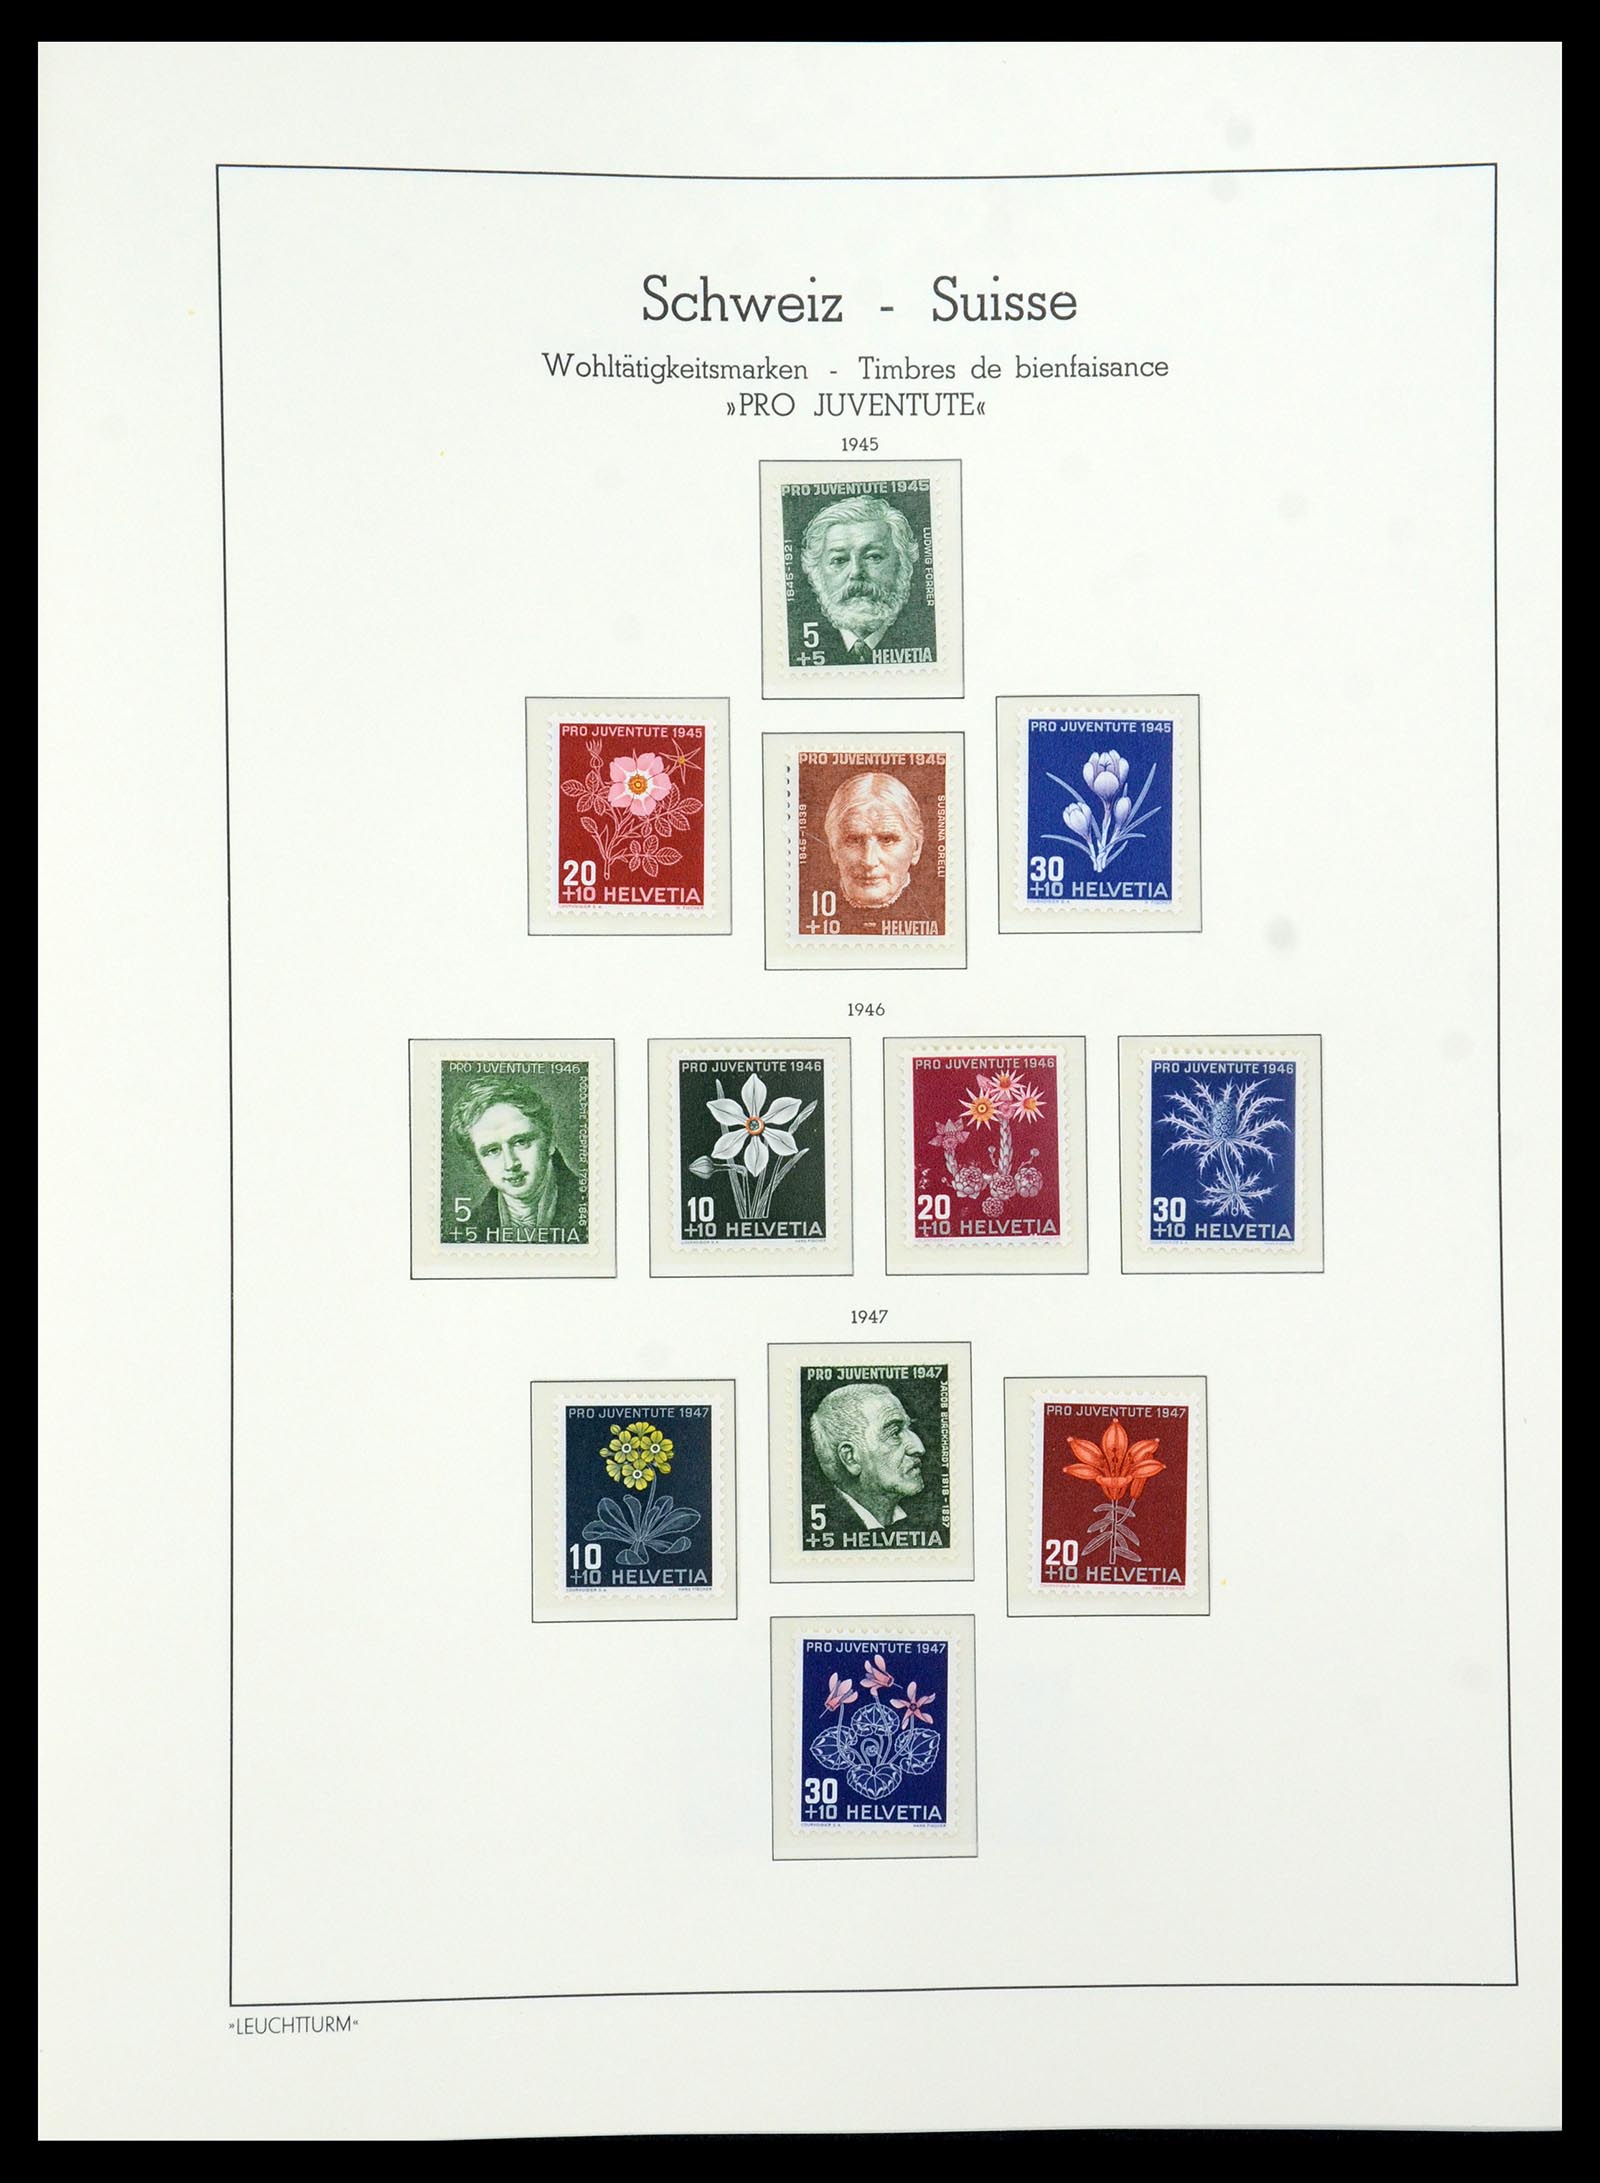 36284 059 - Stamp collection 36284 Switzerland 1854-2006.